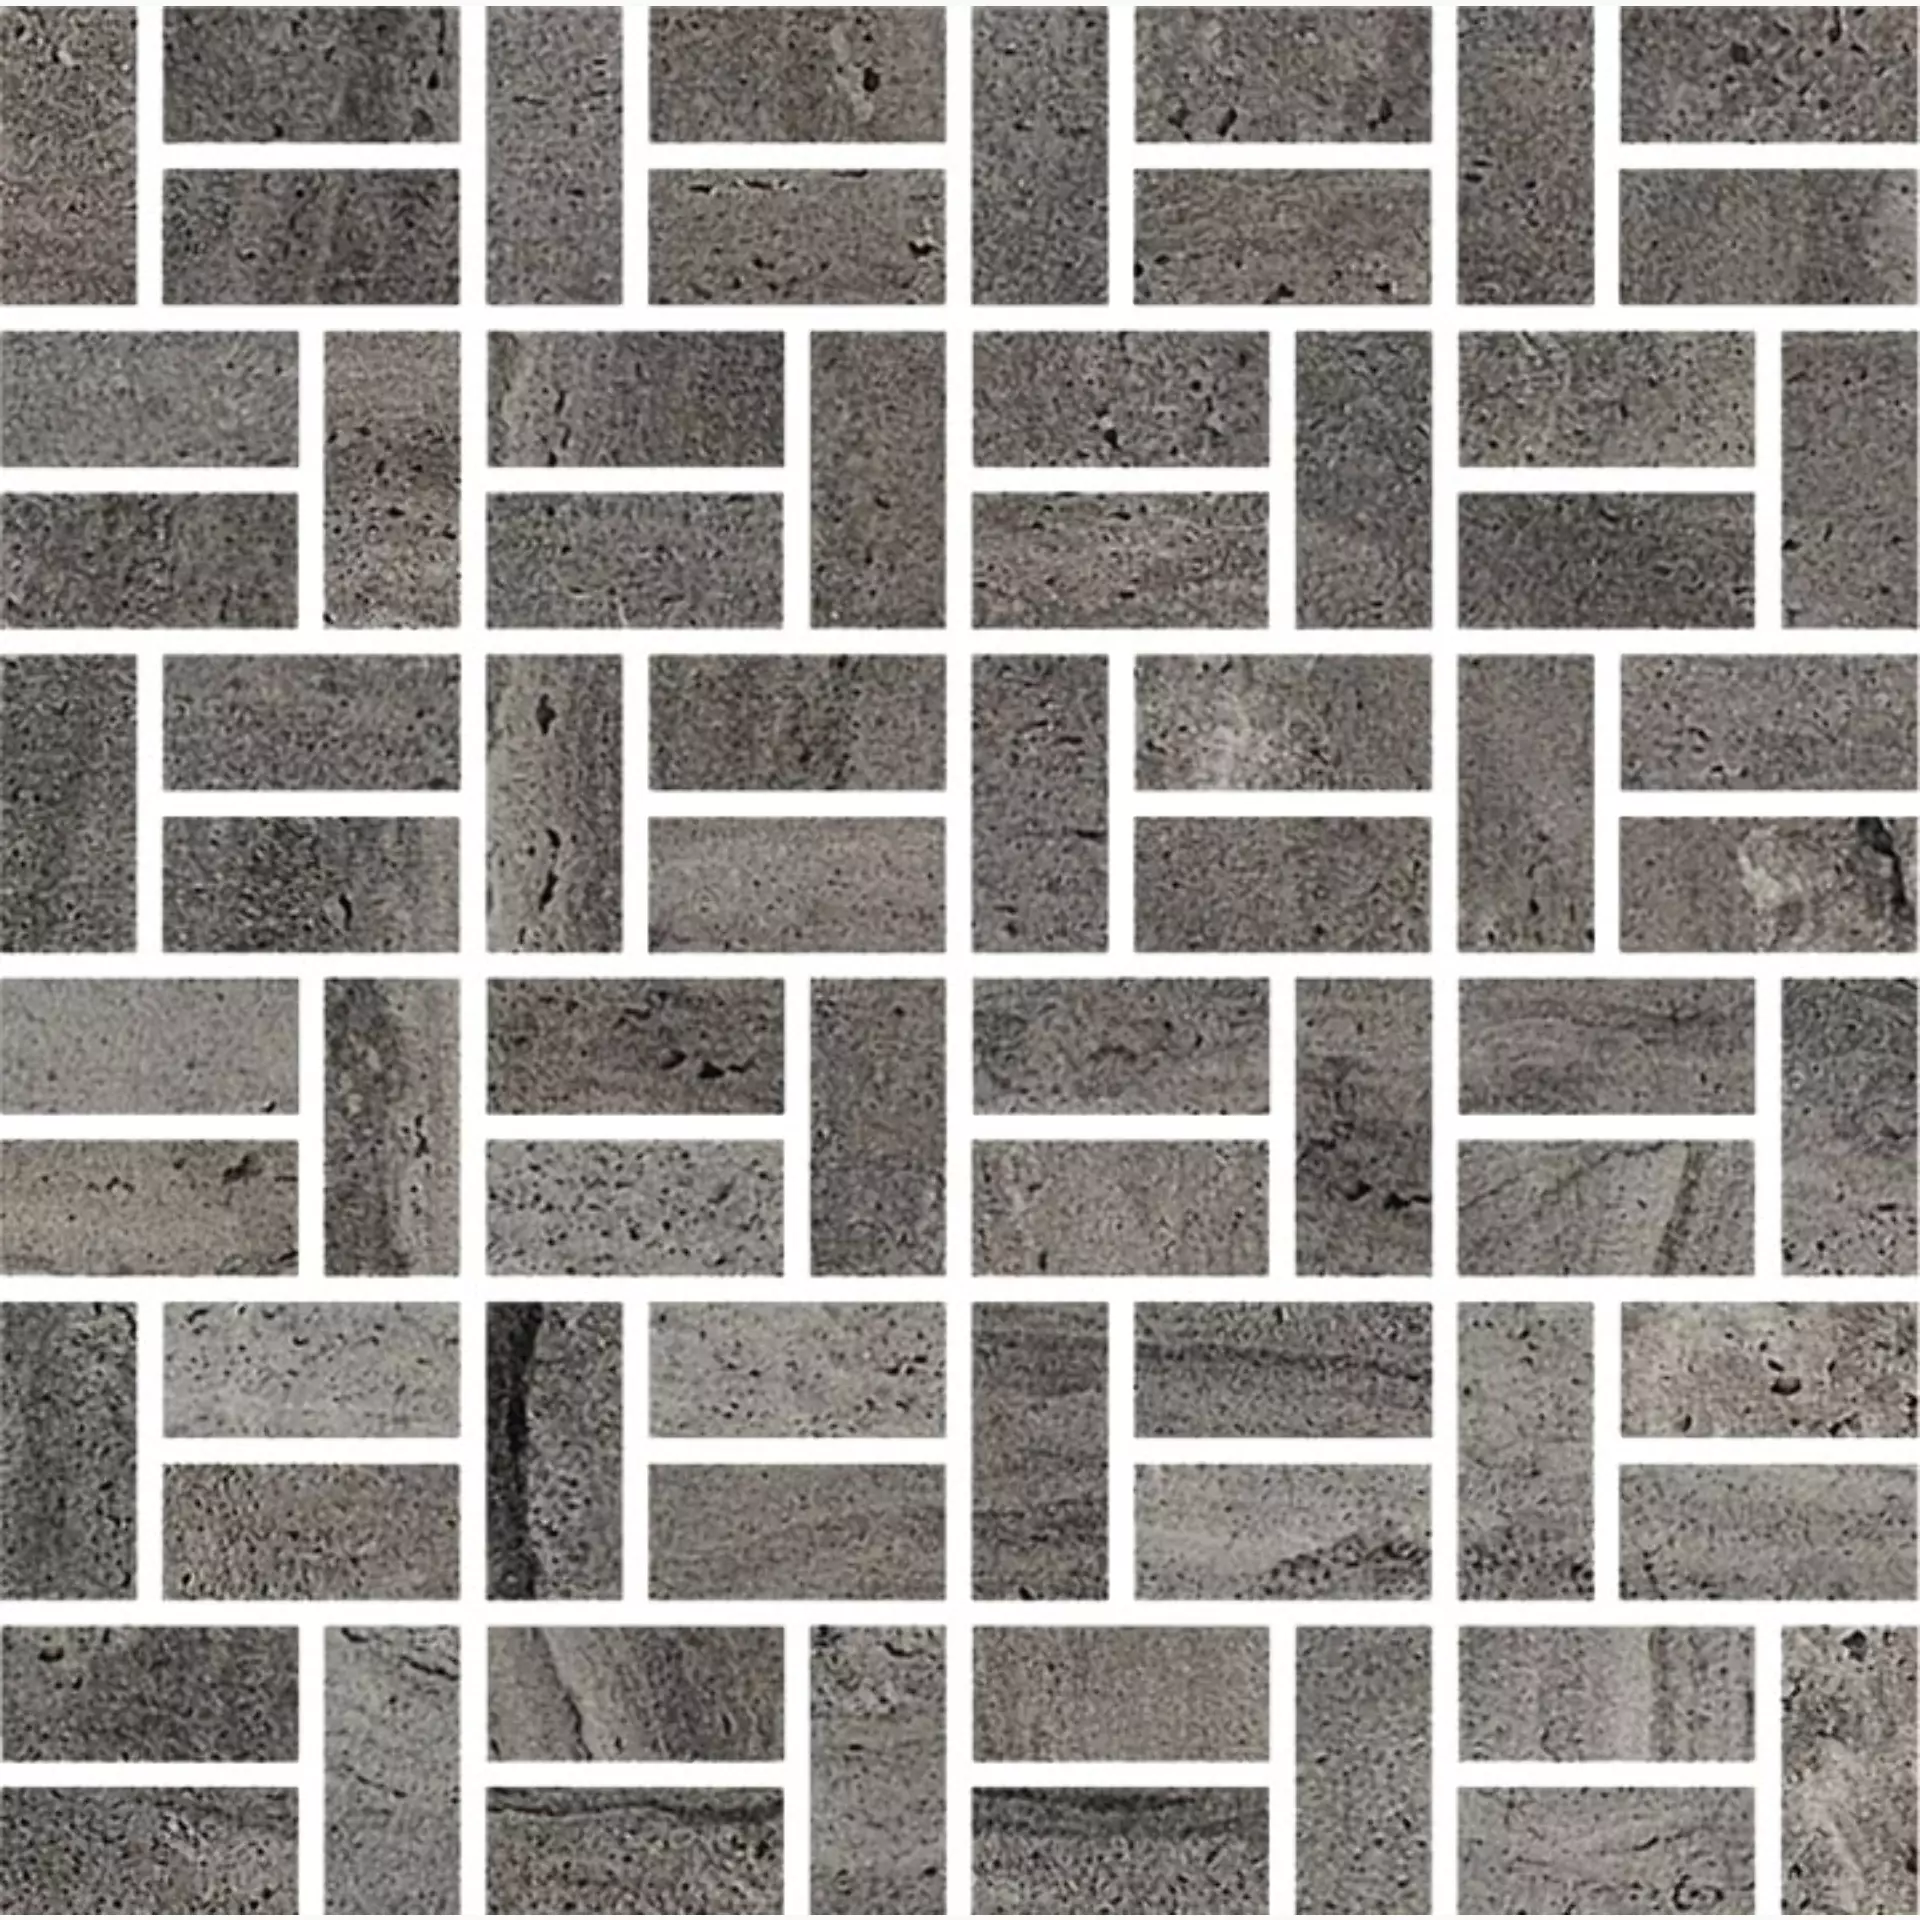 Coem Reverso2 Black Patinato Mosaic Bricks 2x5 RV7MS3P 30x30cm rectified